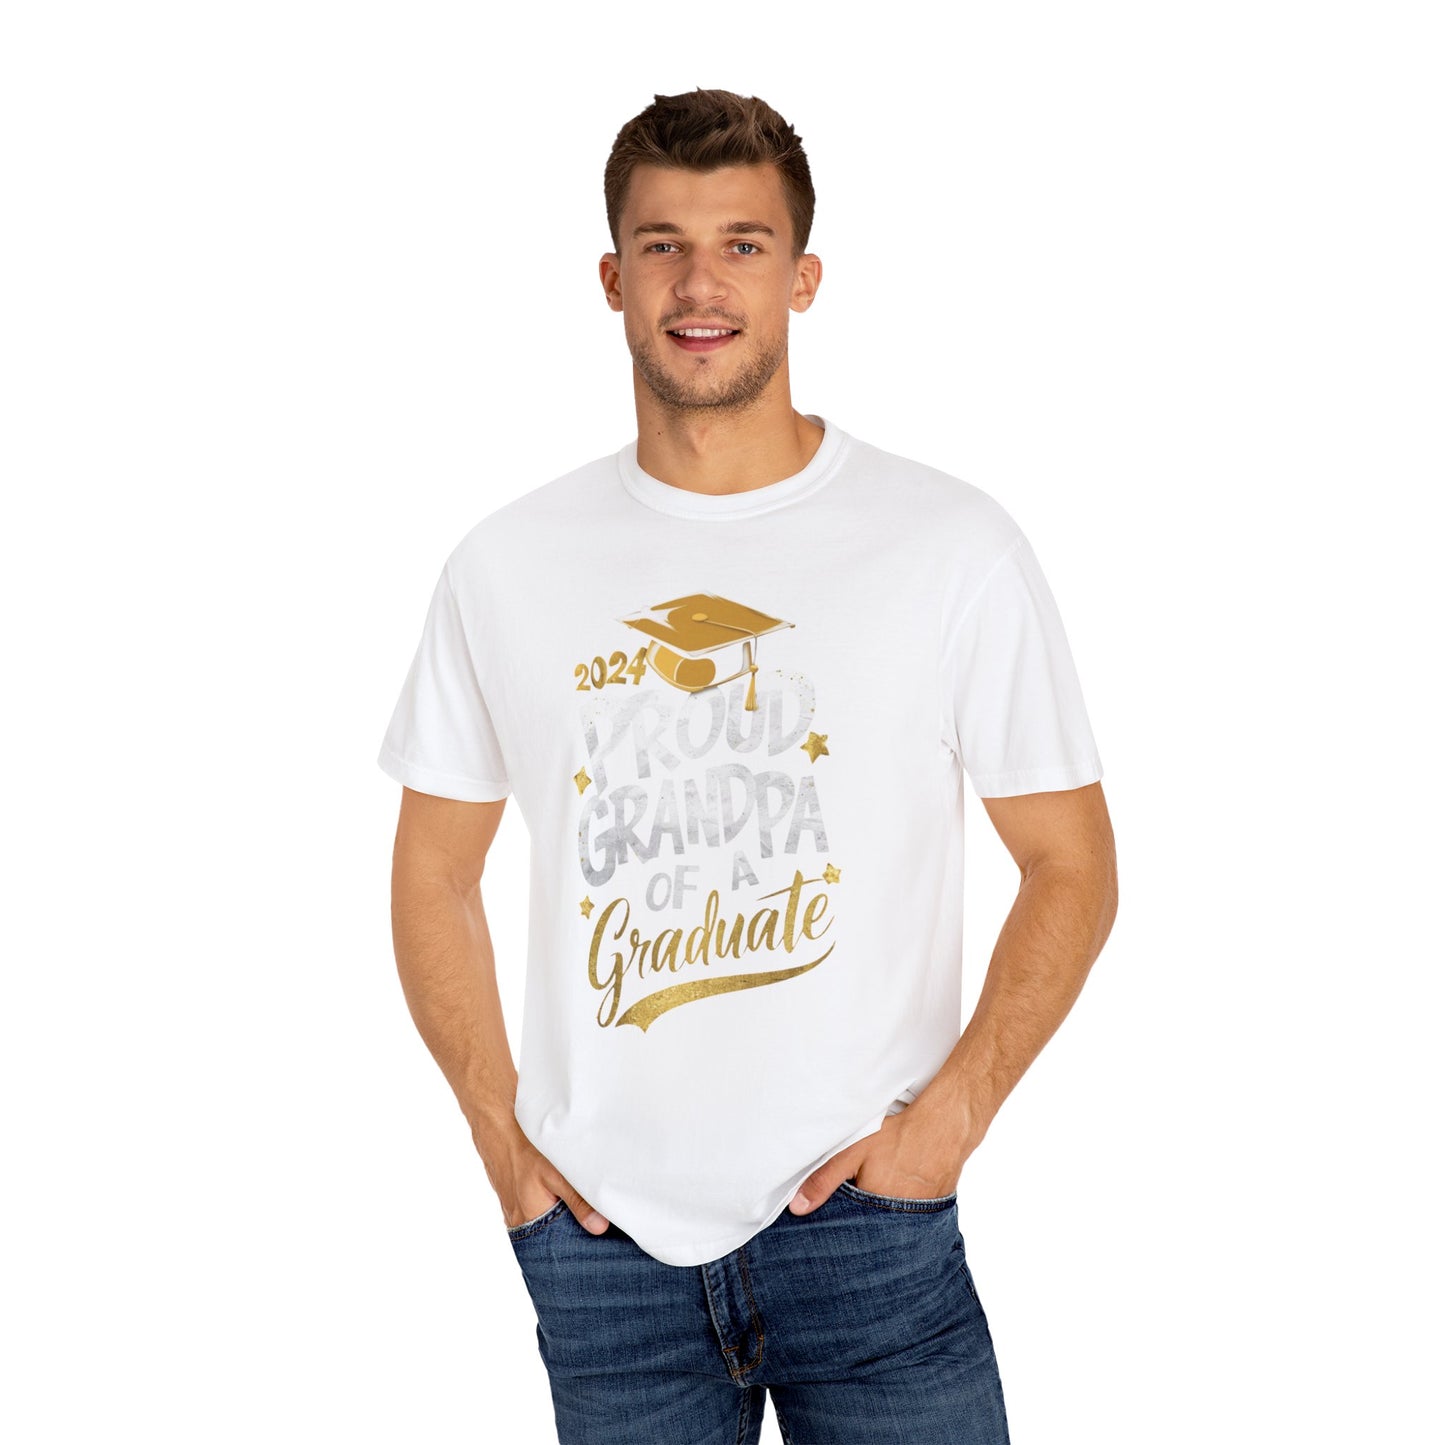 Proud Grandpa of a 2024 Graduate Unisex Garment-dyed T-shirt Cotton Funny Humorous Graphic Soft Premium Unisex Men Women White T-shirt Birthday Gift-24